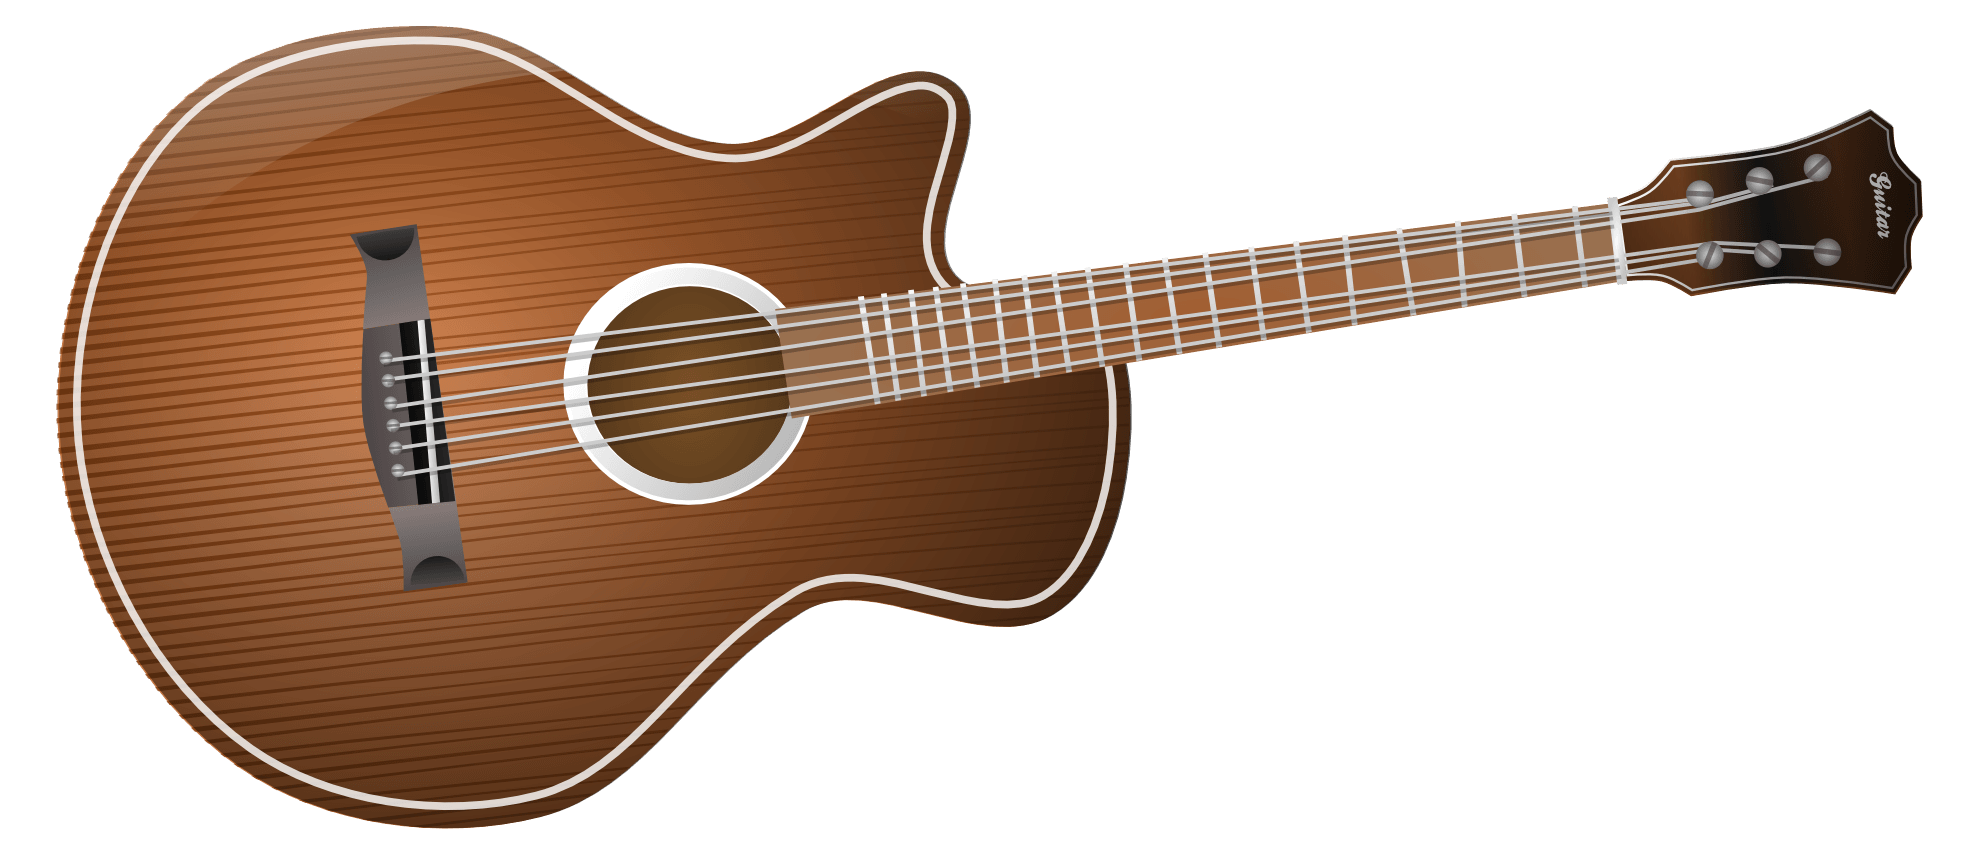 Ukulele Harmonica Banjo Guitar Activity PNG